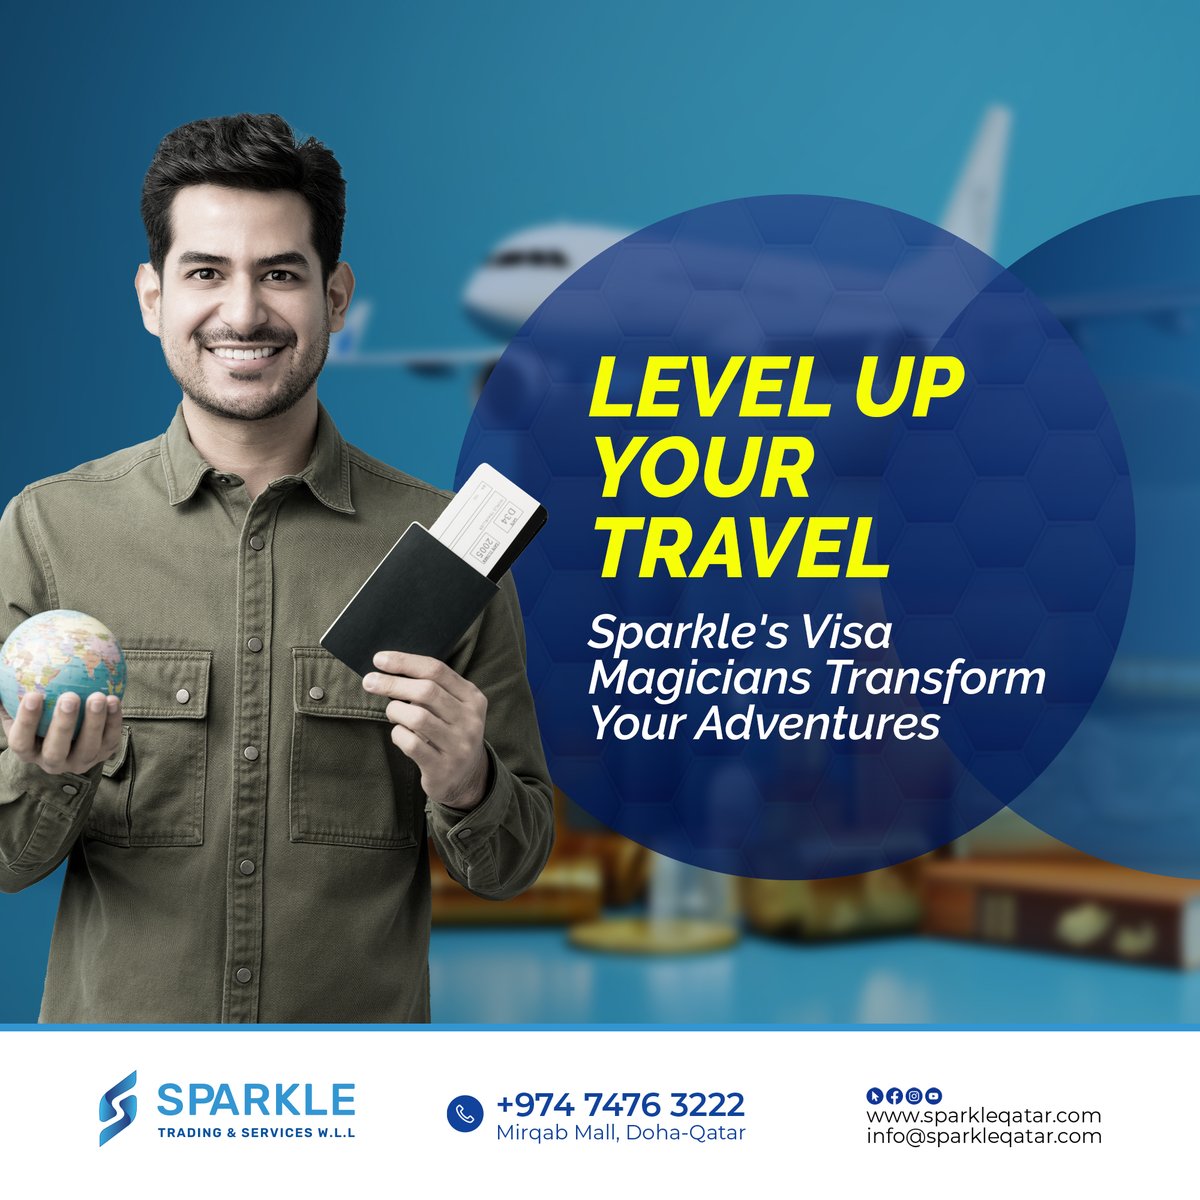 Level up your travel with Sparkle. Let our visa magicians transform your adventures. #TravelUpgrade #VisaMagic #SparkleServices #QatarBusiness #TrustedPartner #BusinessInQatar #QatarOpportunities #BusinessPartnership #QatarServices #QatarMarket #BusinessGrowth